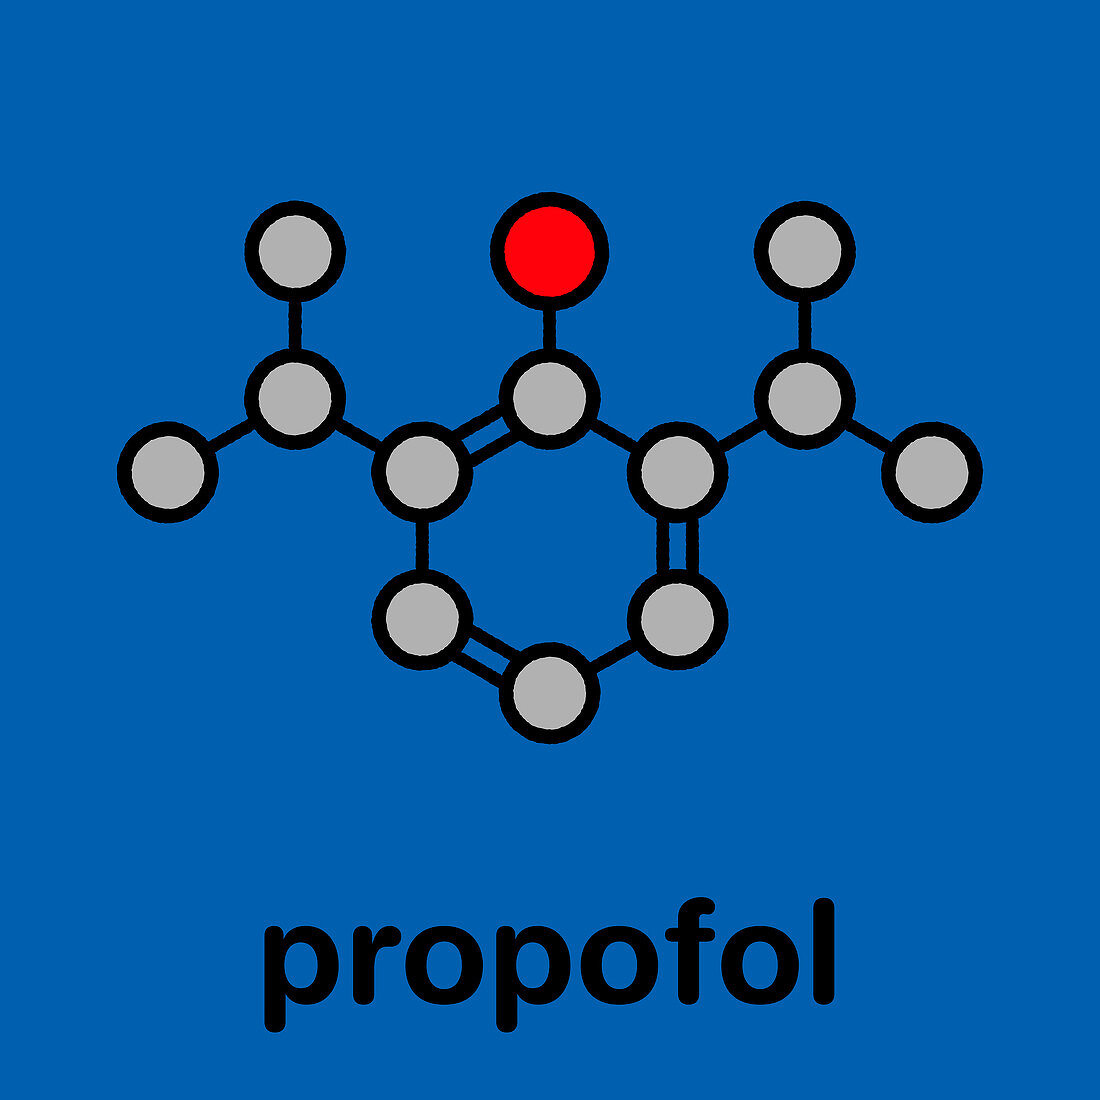 Propofol anesthetic drug, molecular model